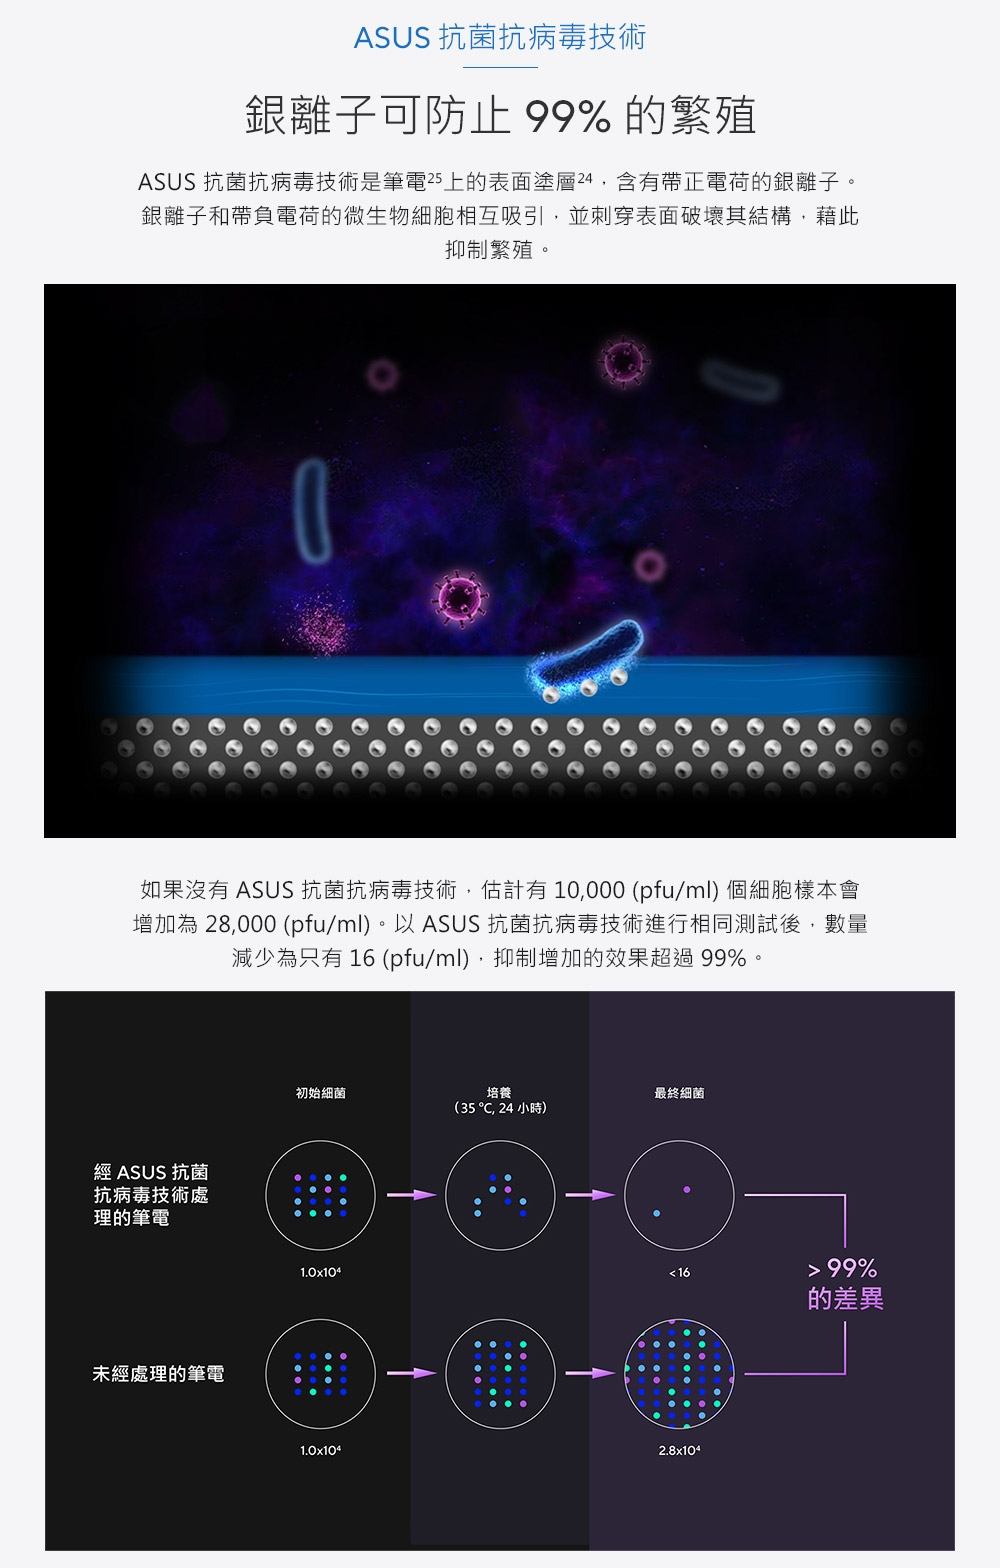 ASUS 抗菌抗病毒技術銀離子可防止 99% 的繁殖ASUS 抗菌抗病毒技術是筆電25上的表面塗層24含有帶正電荷的銀離子。銀離子和帶負電荷的微生物細胞相互吸引,並刺穿表面破壞其結構,藉此抑制繁殖。如果沒有 ASUS 抗菌抗病毒技術,估計有10,000 (pfu/ml) 個細胞樣本會增加為 28,000 (pfu/ml)。以ASUS 抗菌抗病毒技術進行相同測試後,數量減少為只有 16 (pfu/ml),抑制增加的效果超過 99%。經 ASUS 抗菌抗病毒技術處理的筆電未經處理的筆電初始細菌培養最終細菌(35 , 24 小時)1.0x104<161.0x1042.8x10499%的差異